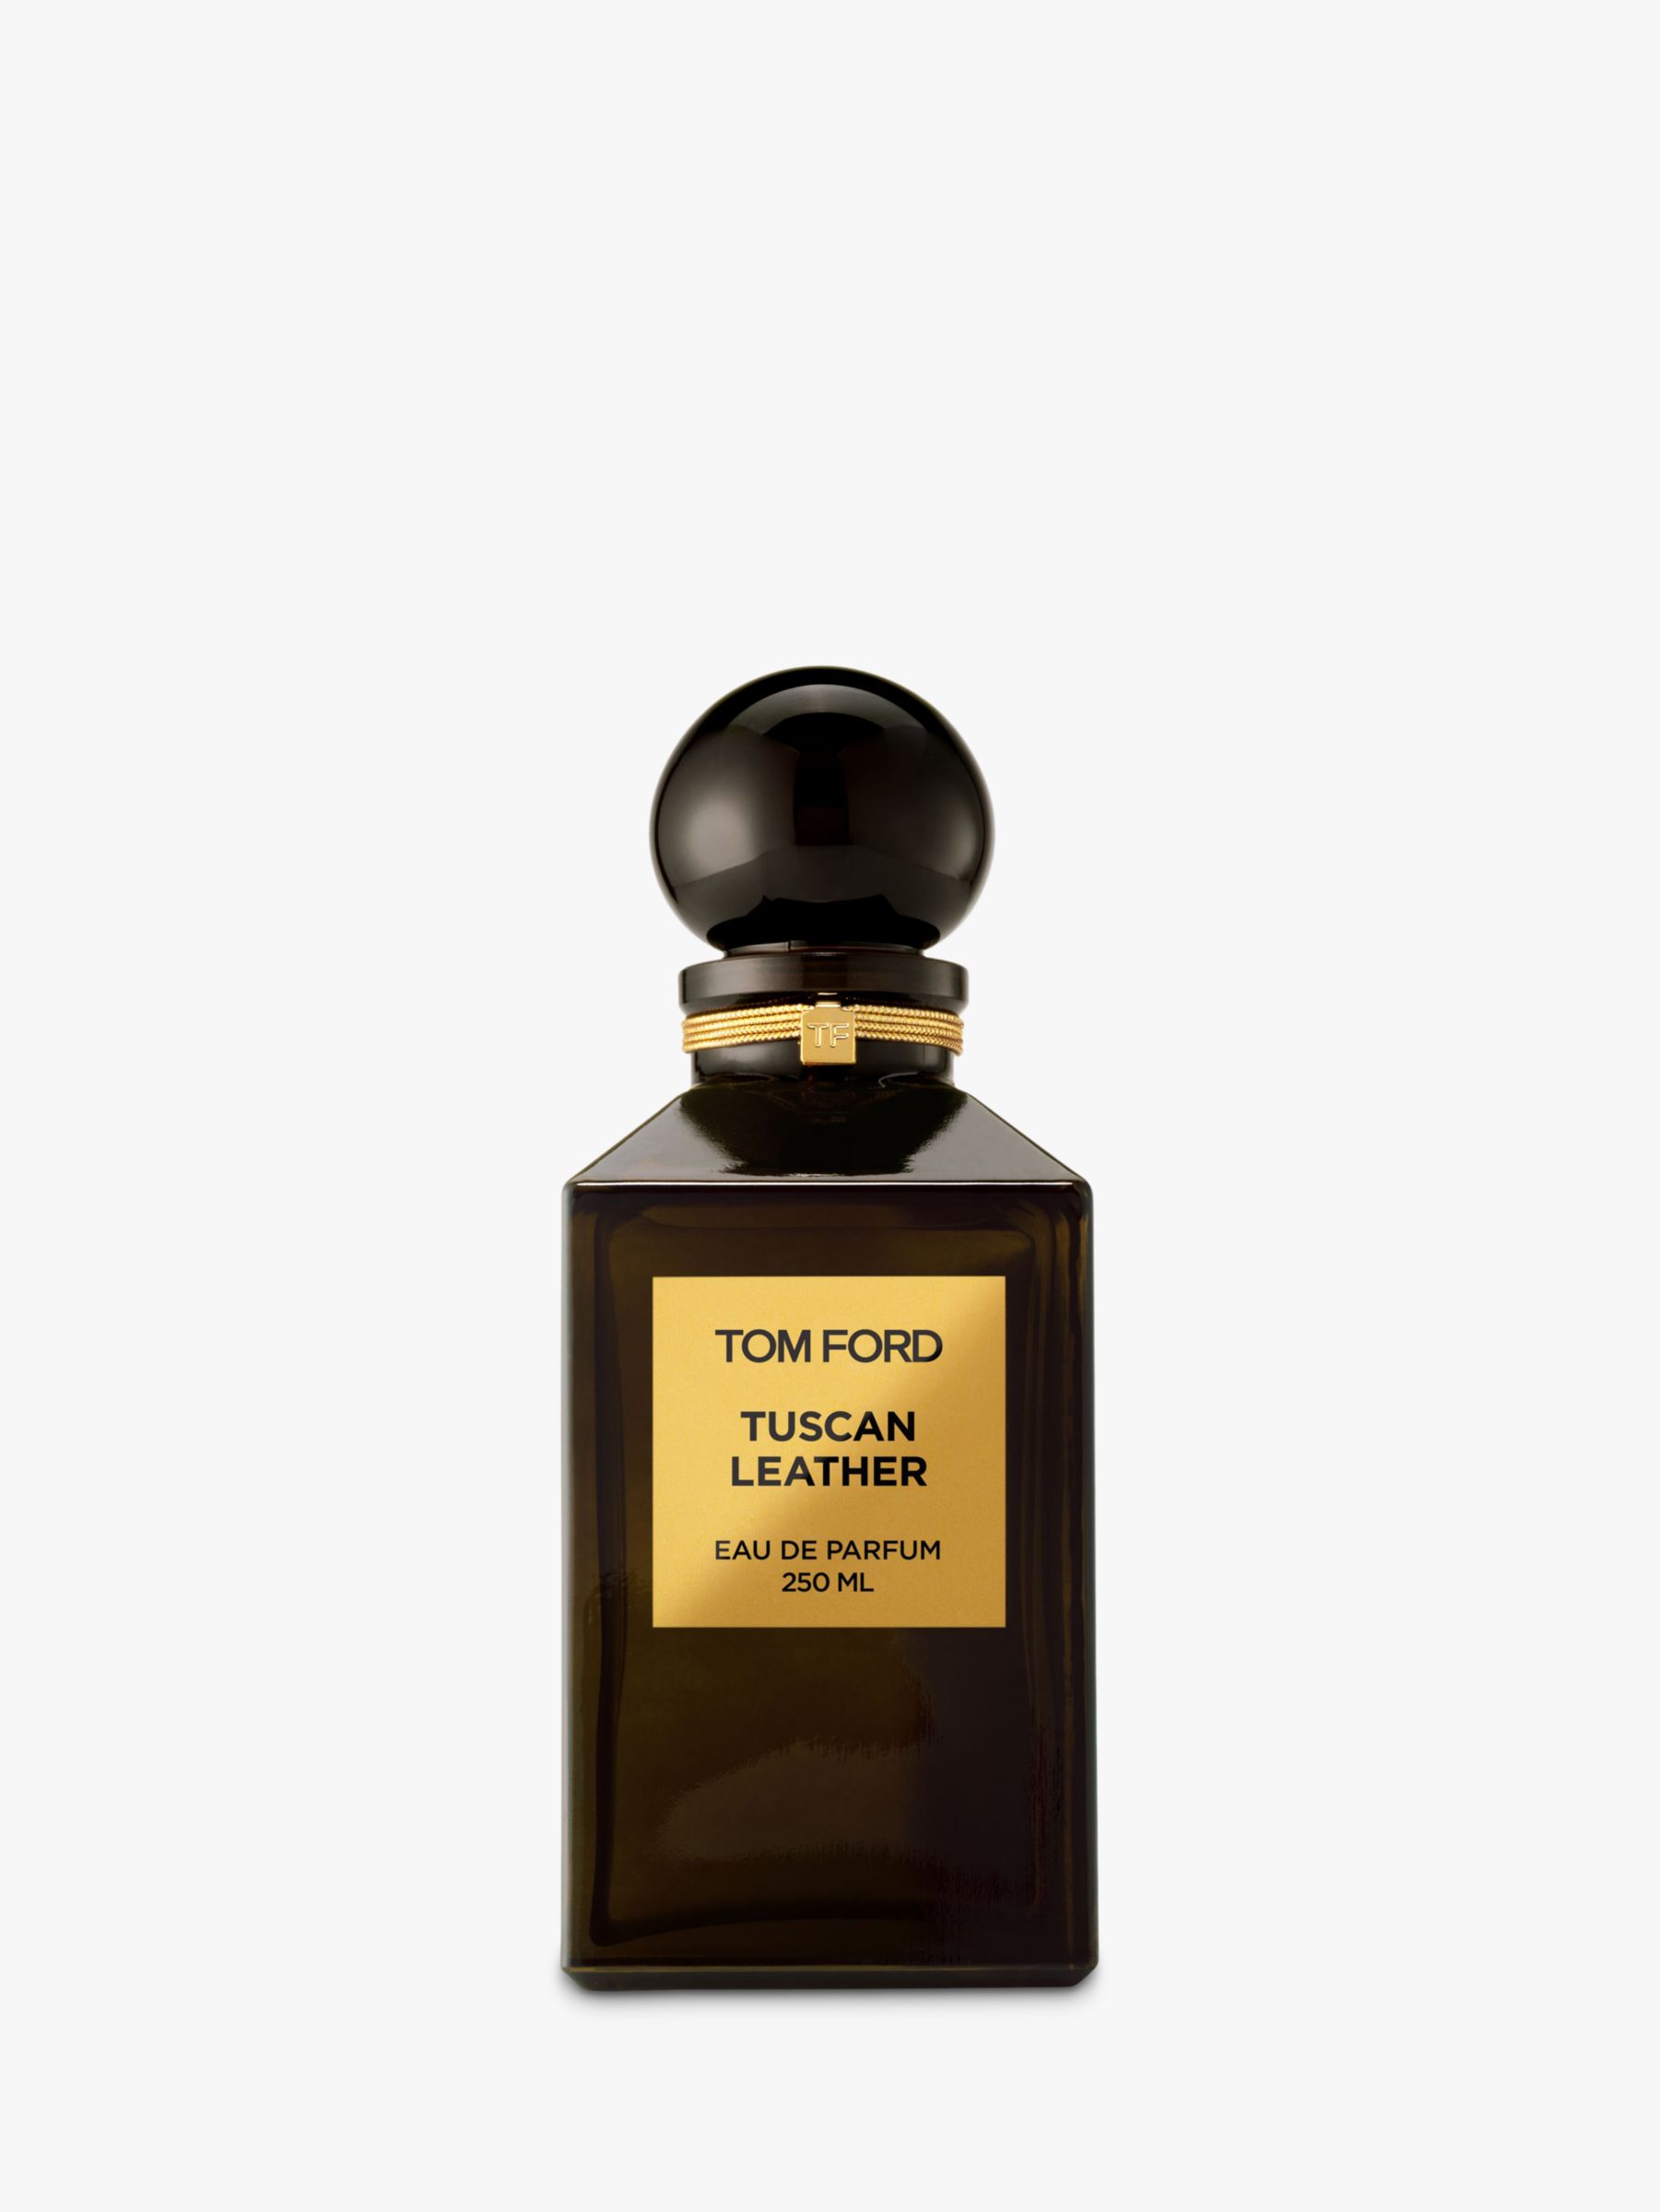 TOM FORD Private Blend Tuscan Leather Eau de Parfum, 250ml at John Lewis &  Partners